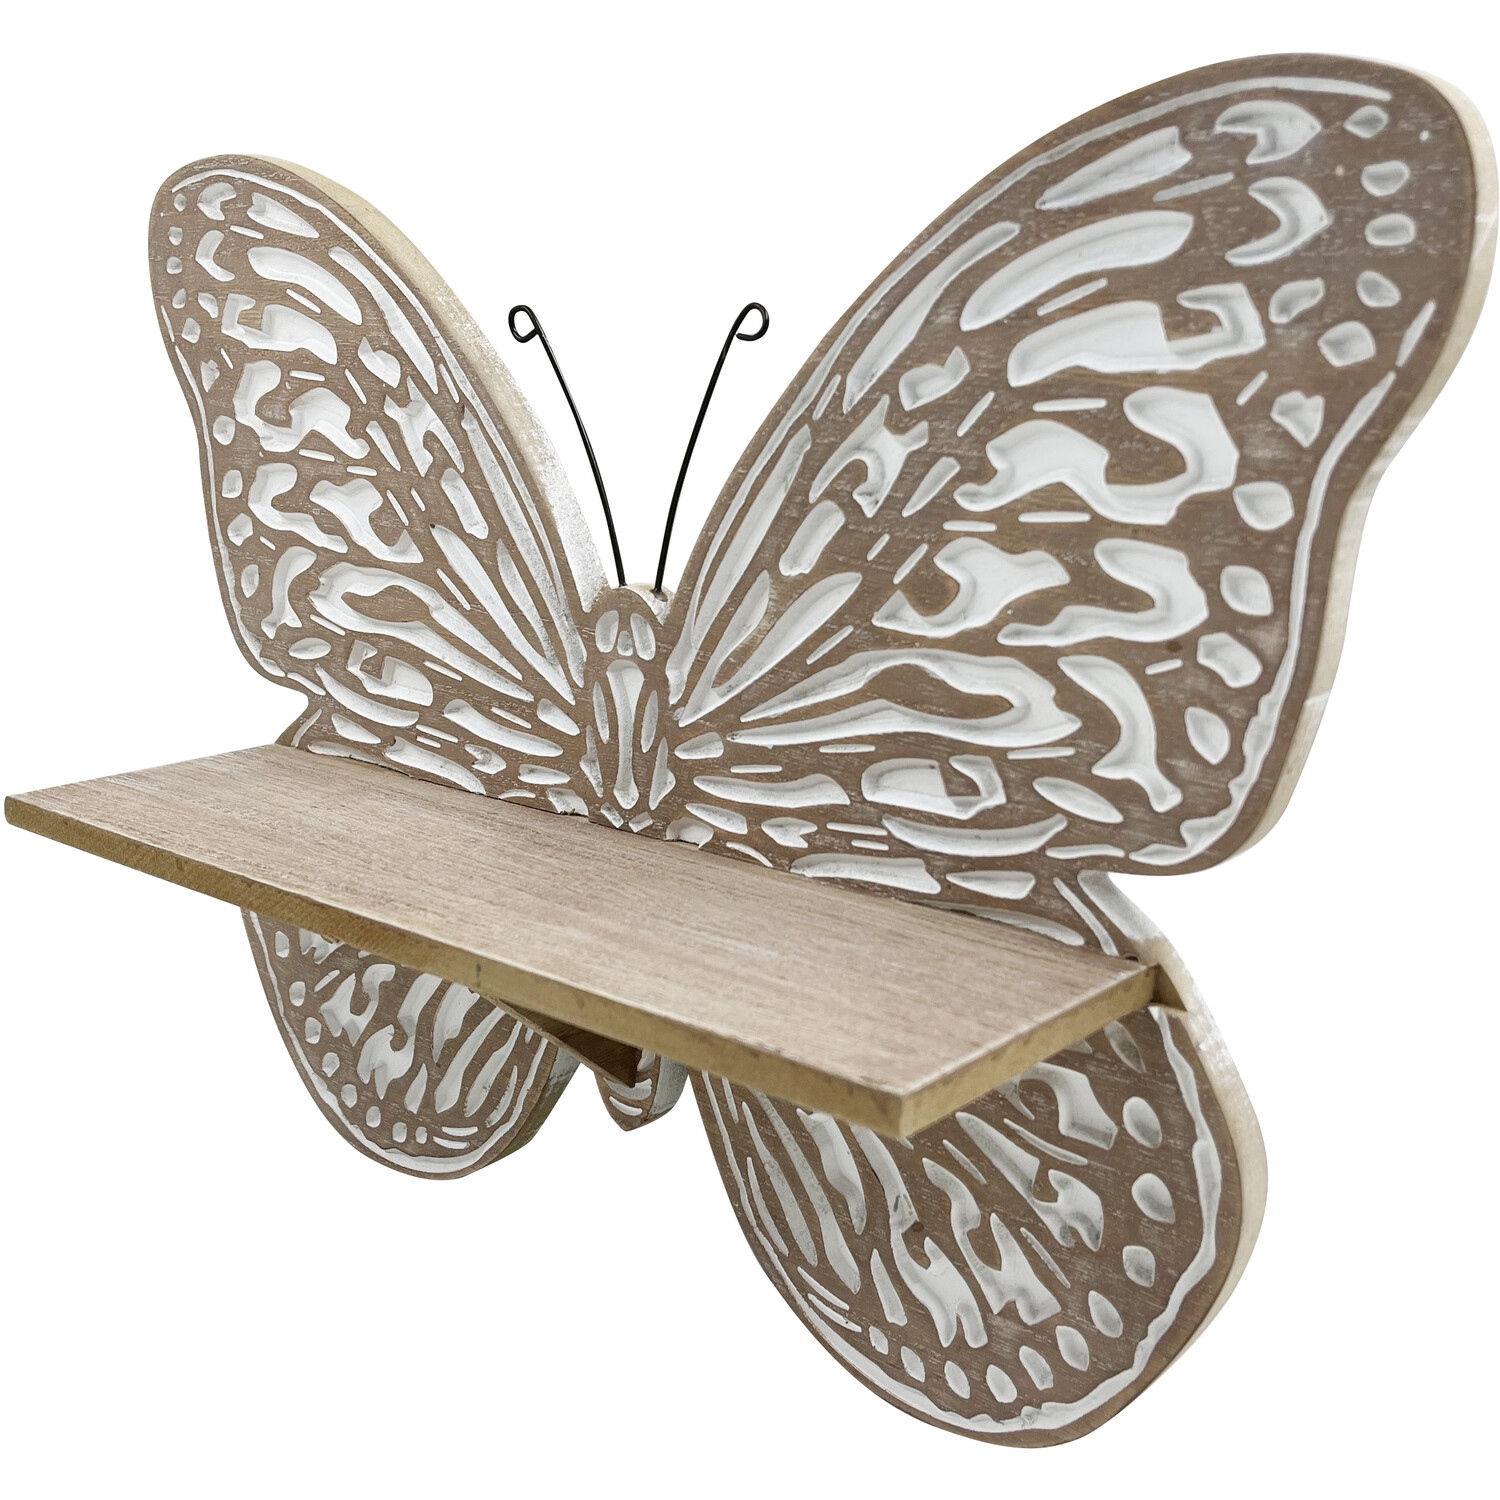 Wood Effect Butterfly Shelf - Brown Image 2